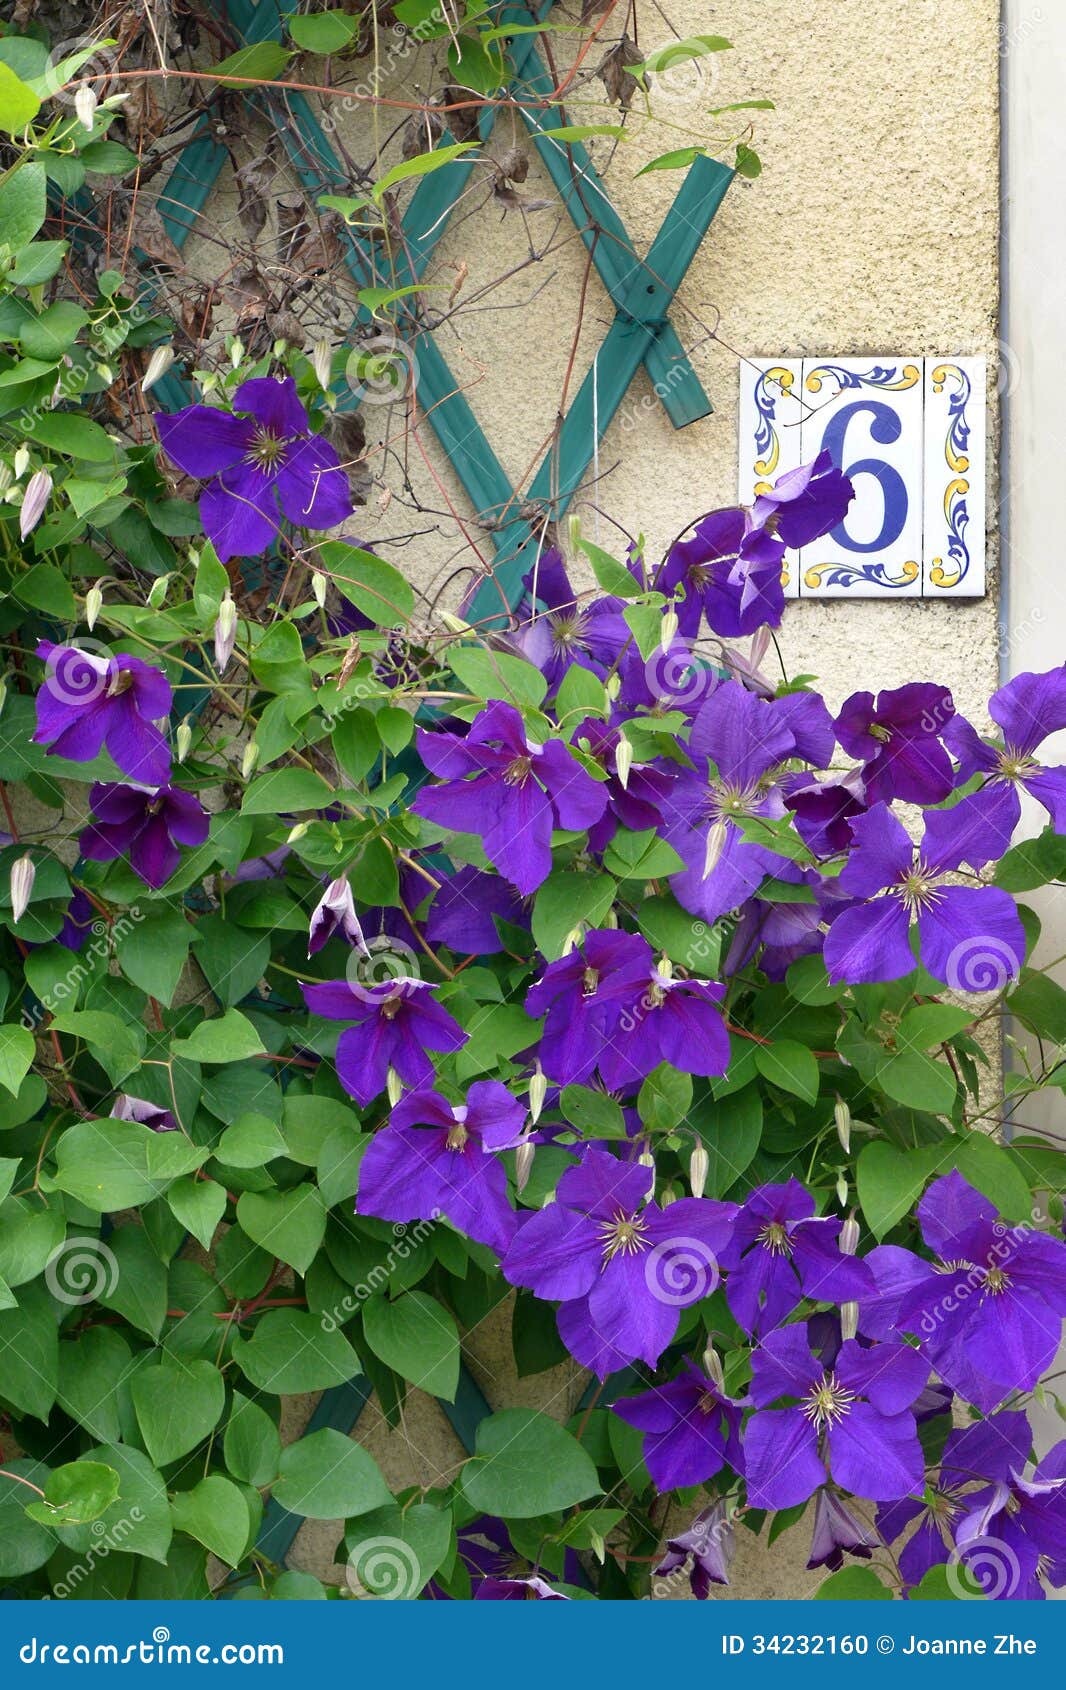 House Number 6 & Purple Flowers Stock Photo - Image: 34232160